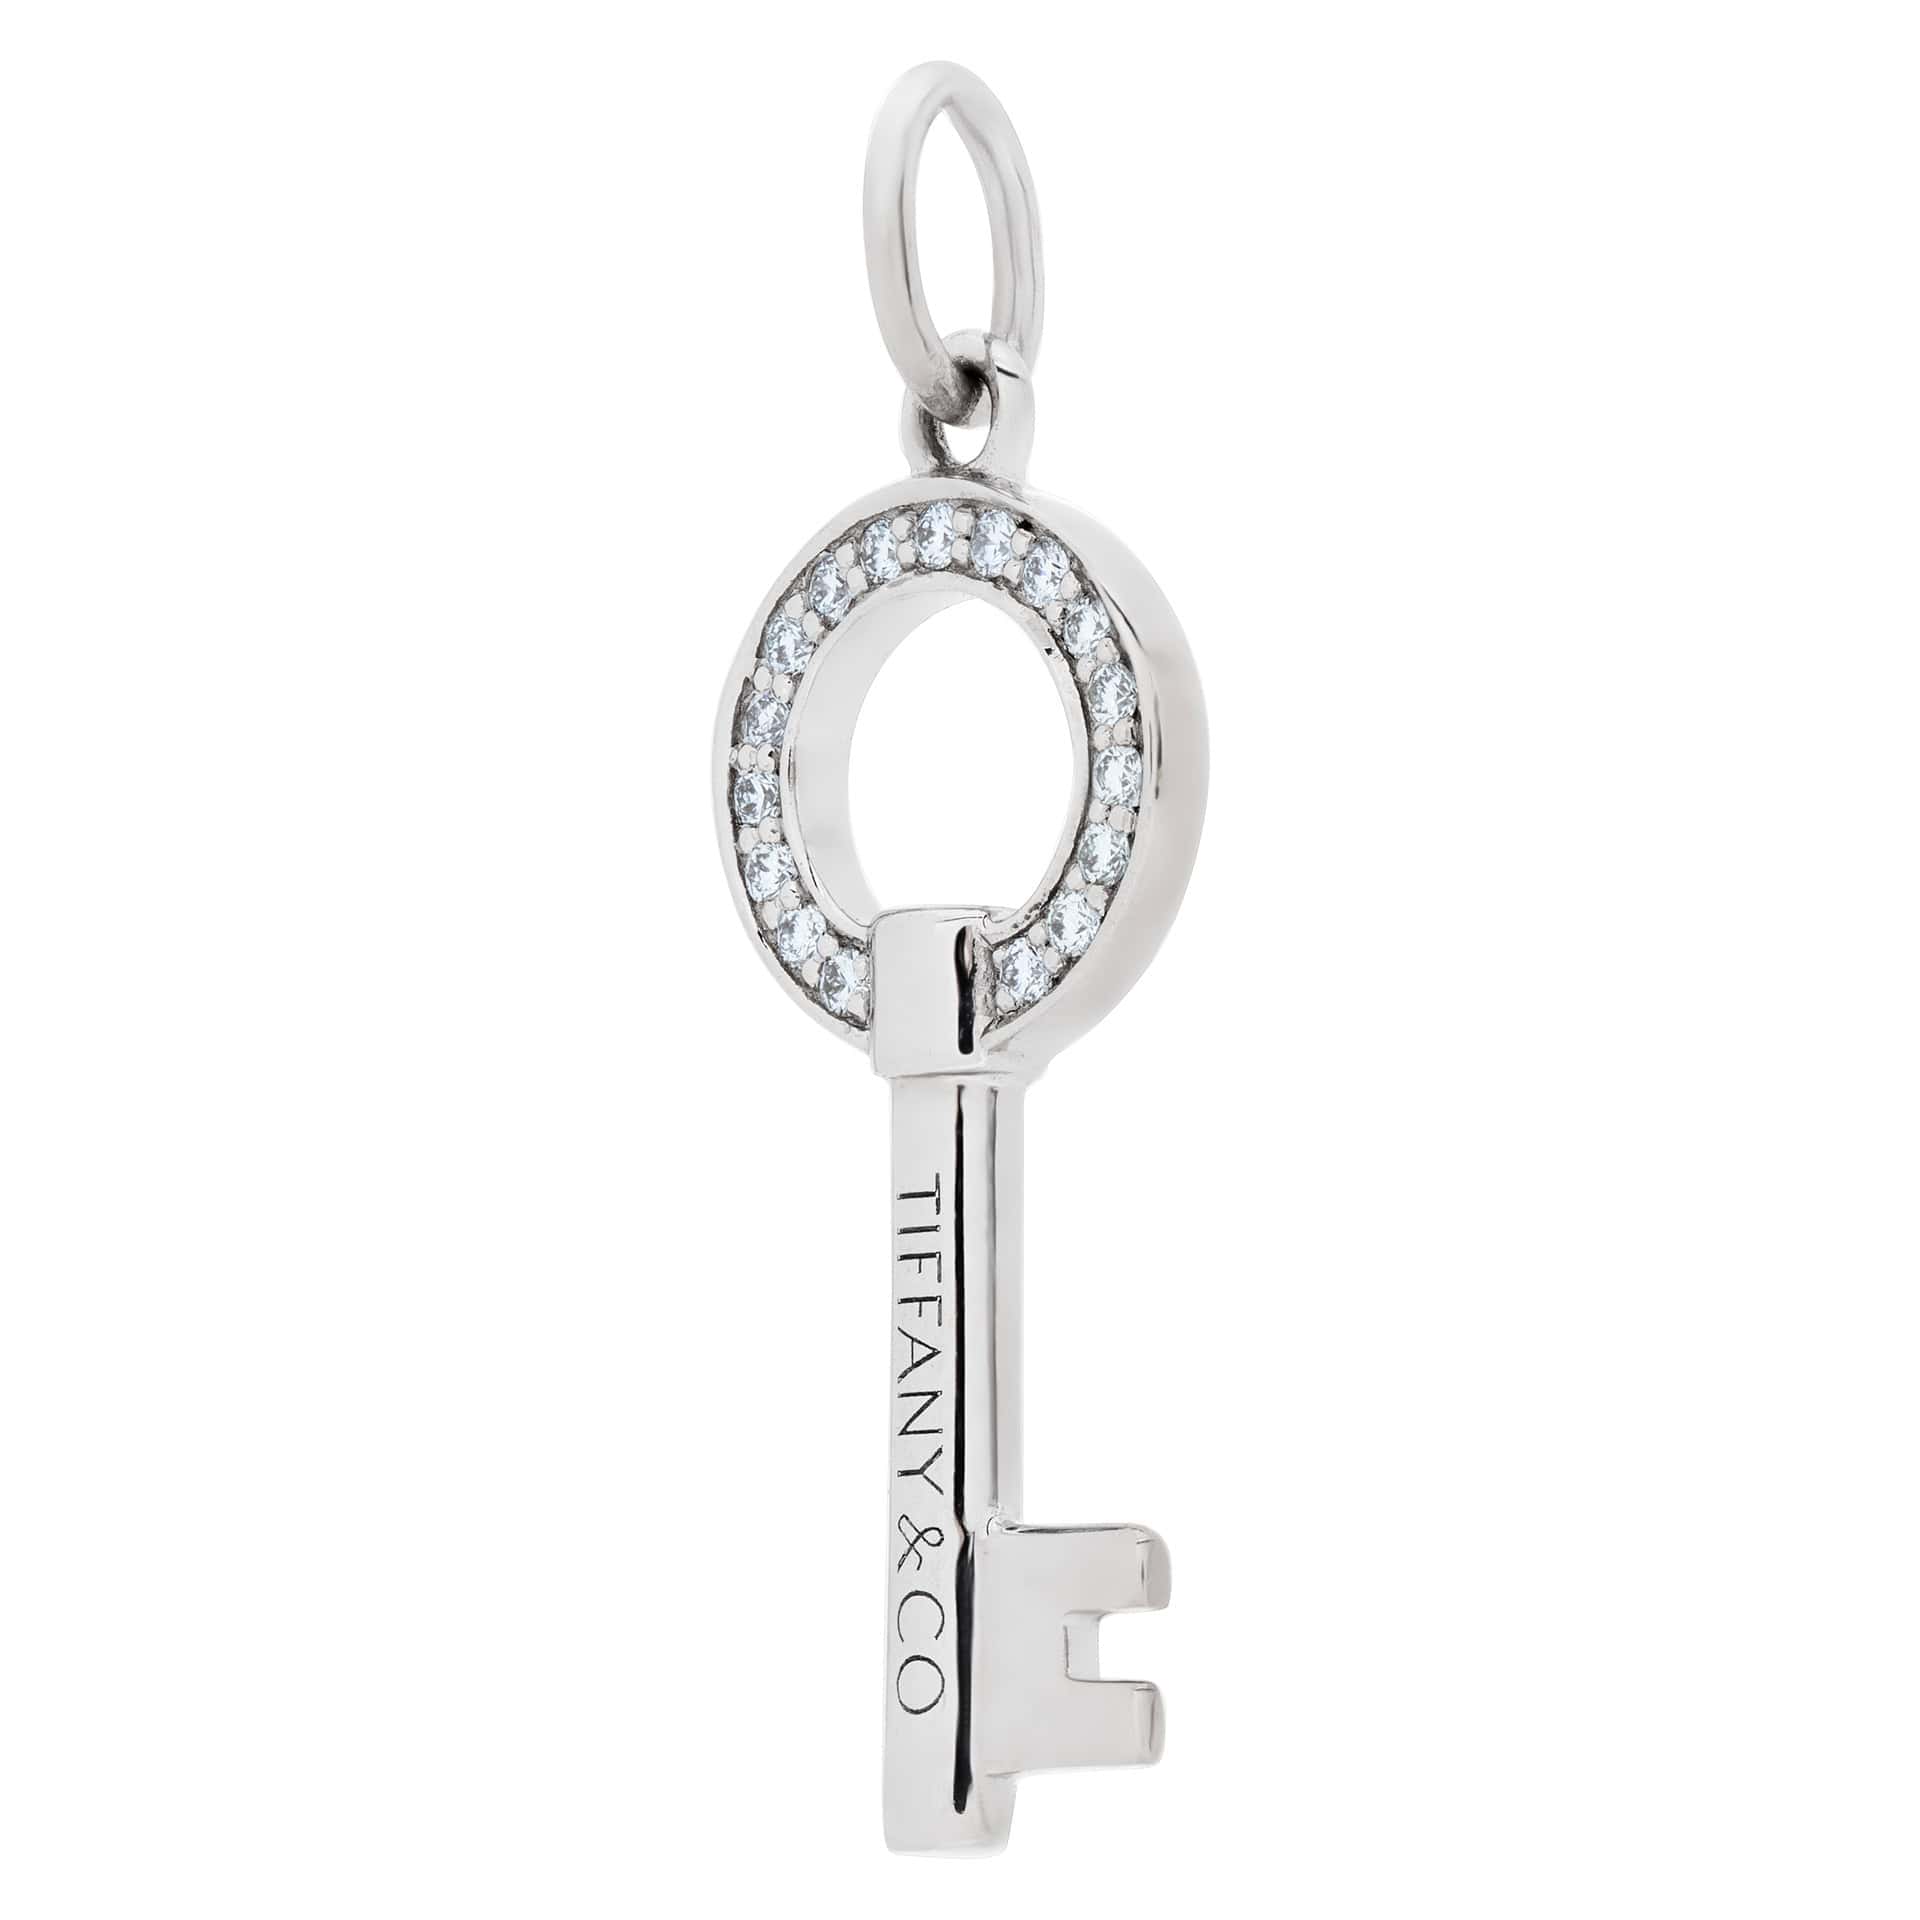 Tiffany Keys modern keys open round key pendant in 18k white gold with  diamonds.